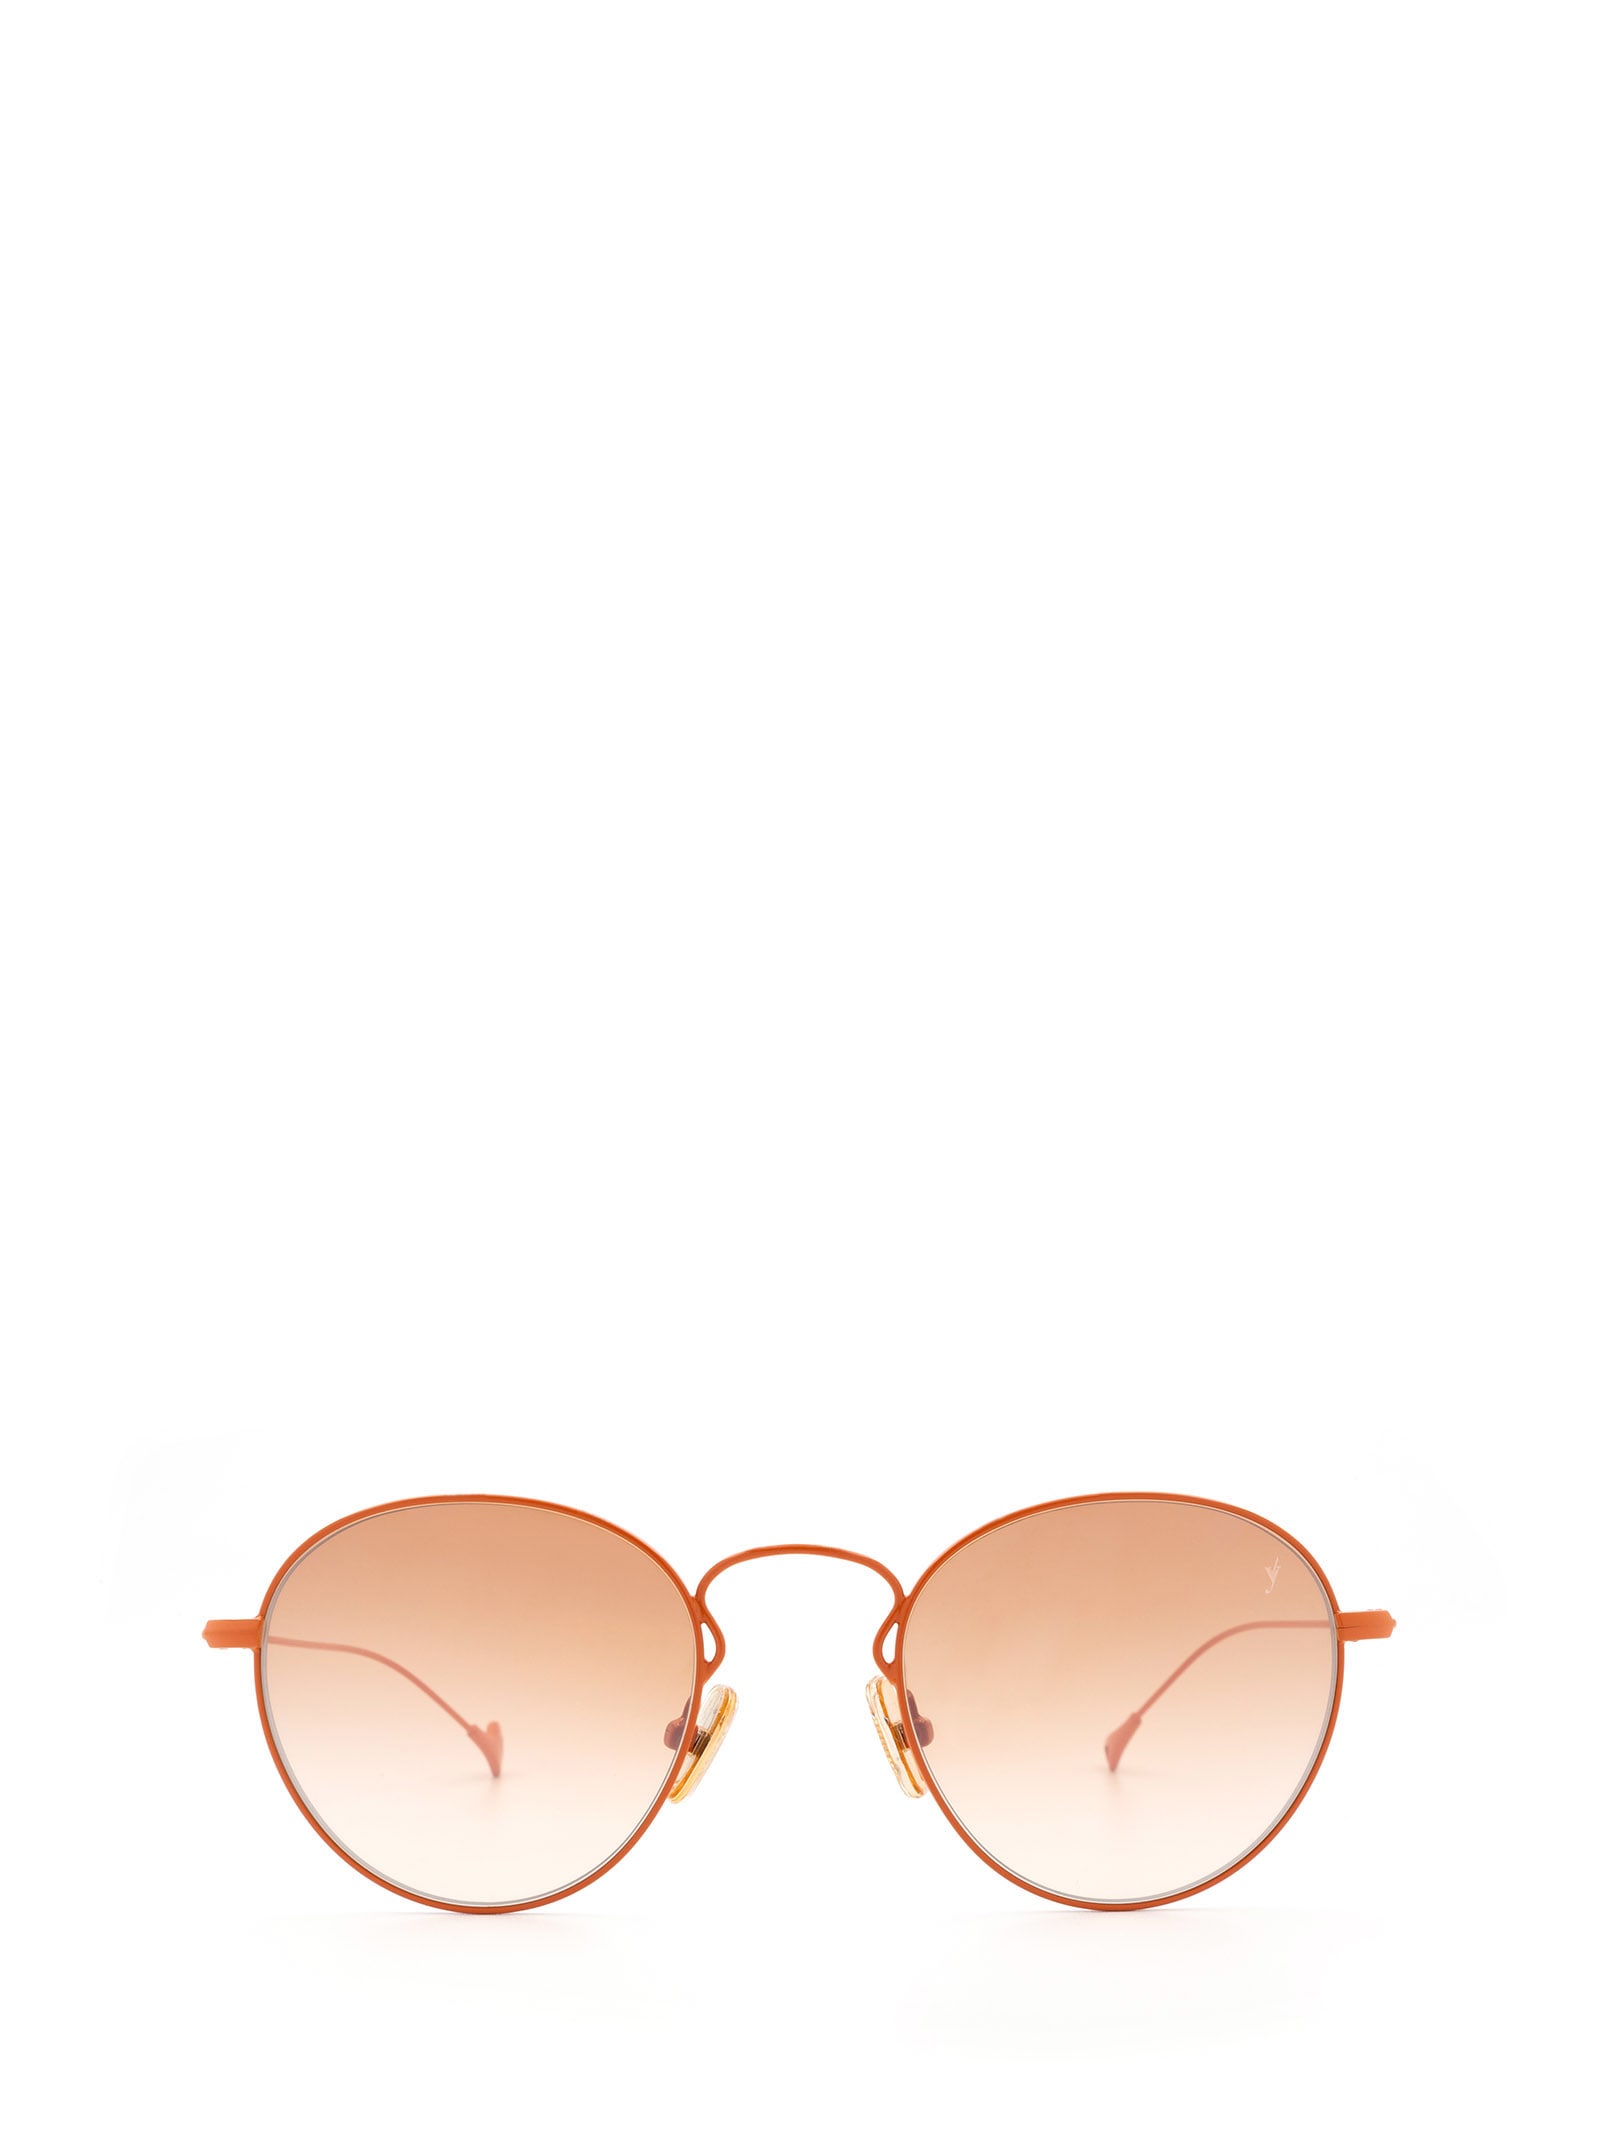 Julien Orange Sunglasses